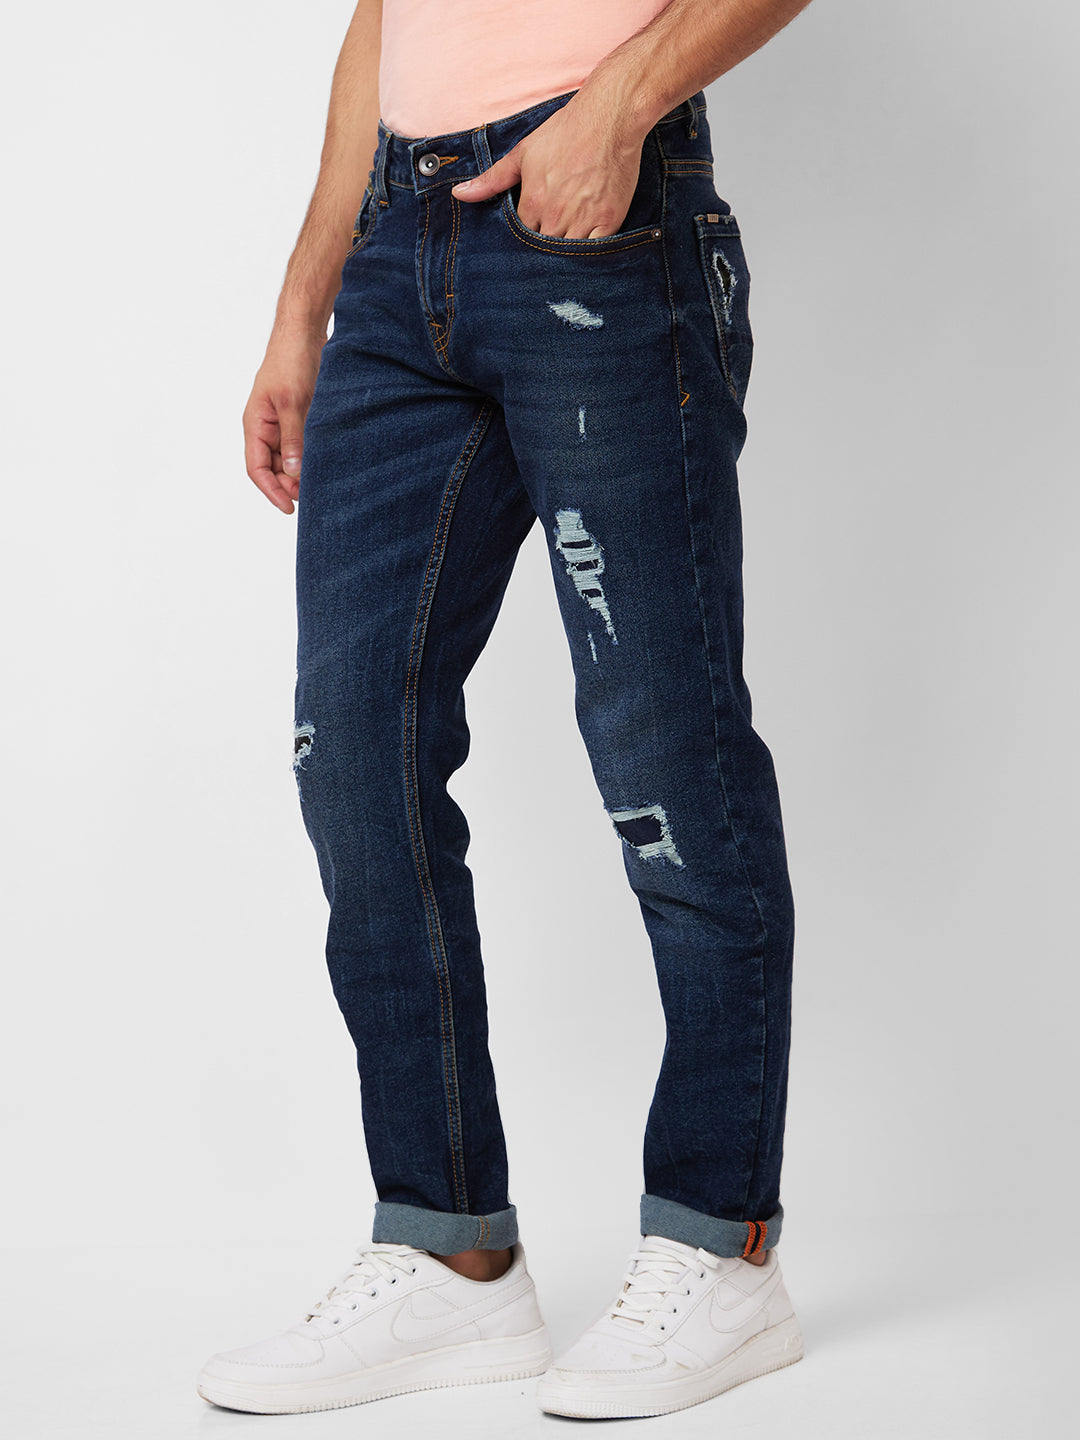 Spykar Low Rise Skinny Fit Blue Jeans For Men